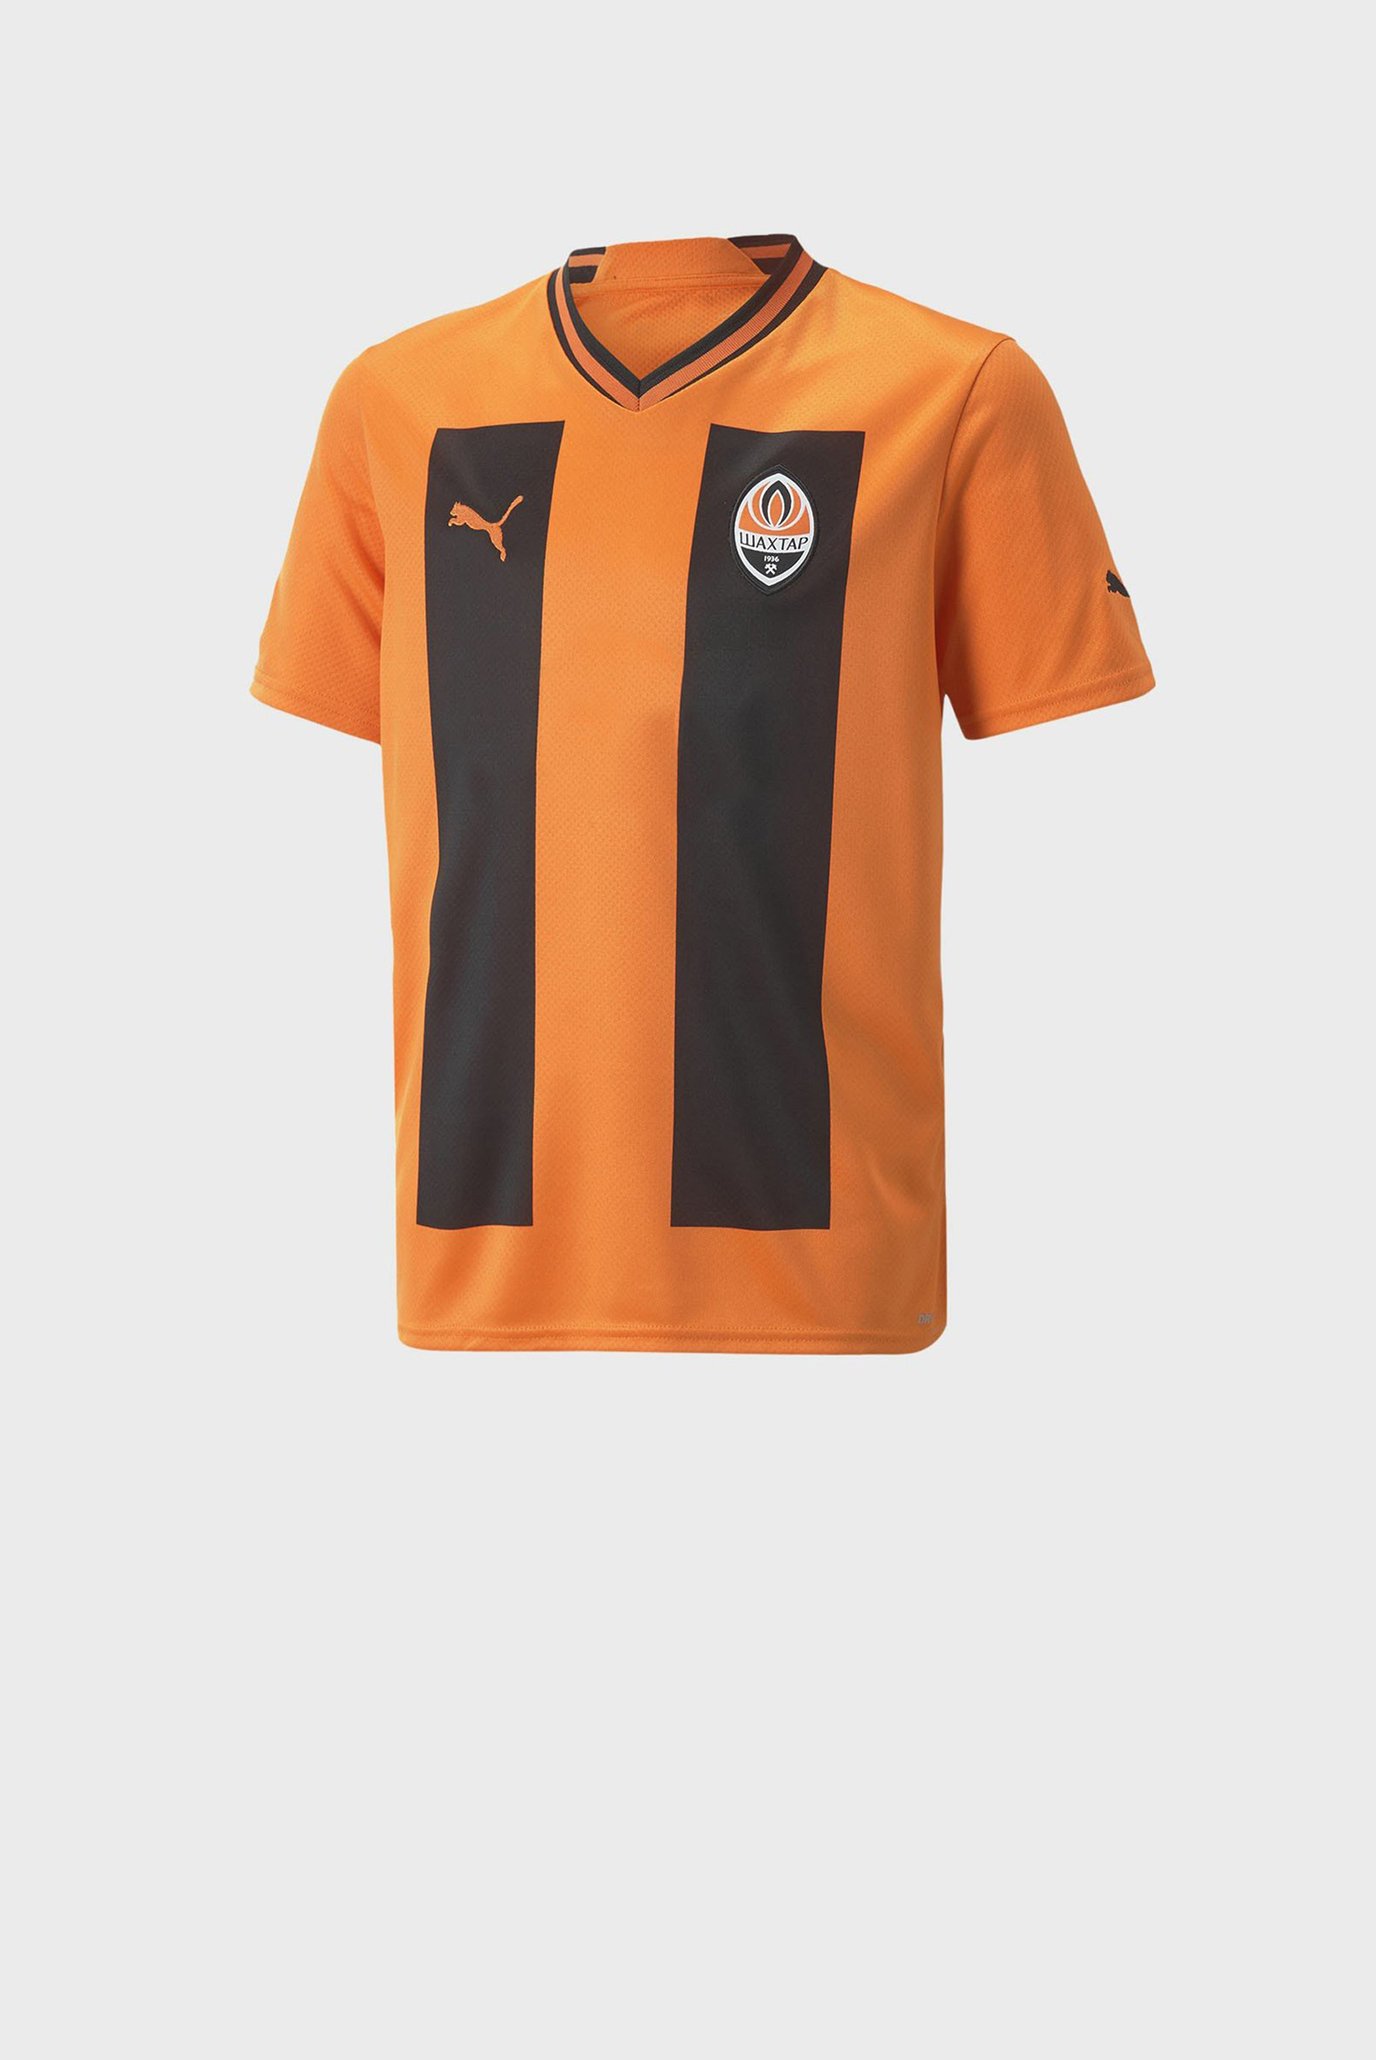 Детская оранжевая футболкаFC Shakhtar Donetsk Home 22/23 Replica Jersey 1